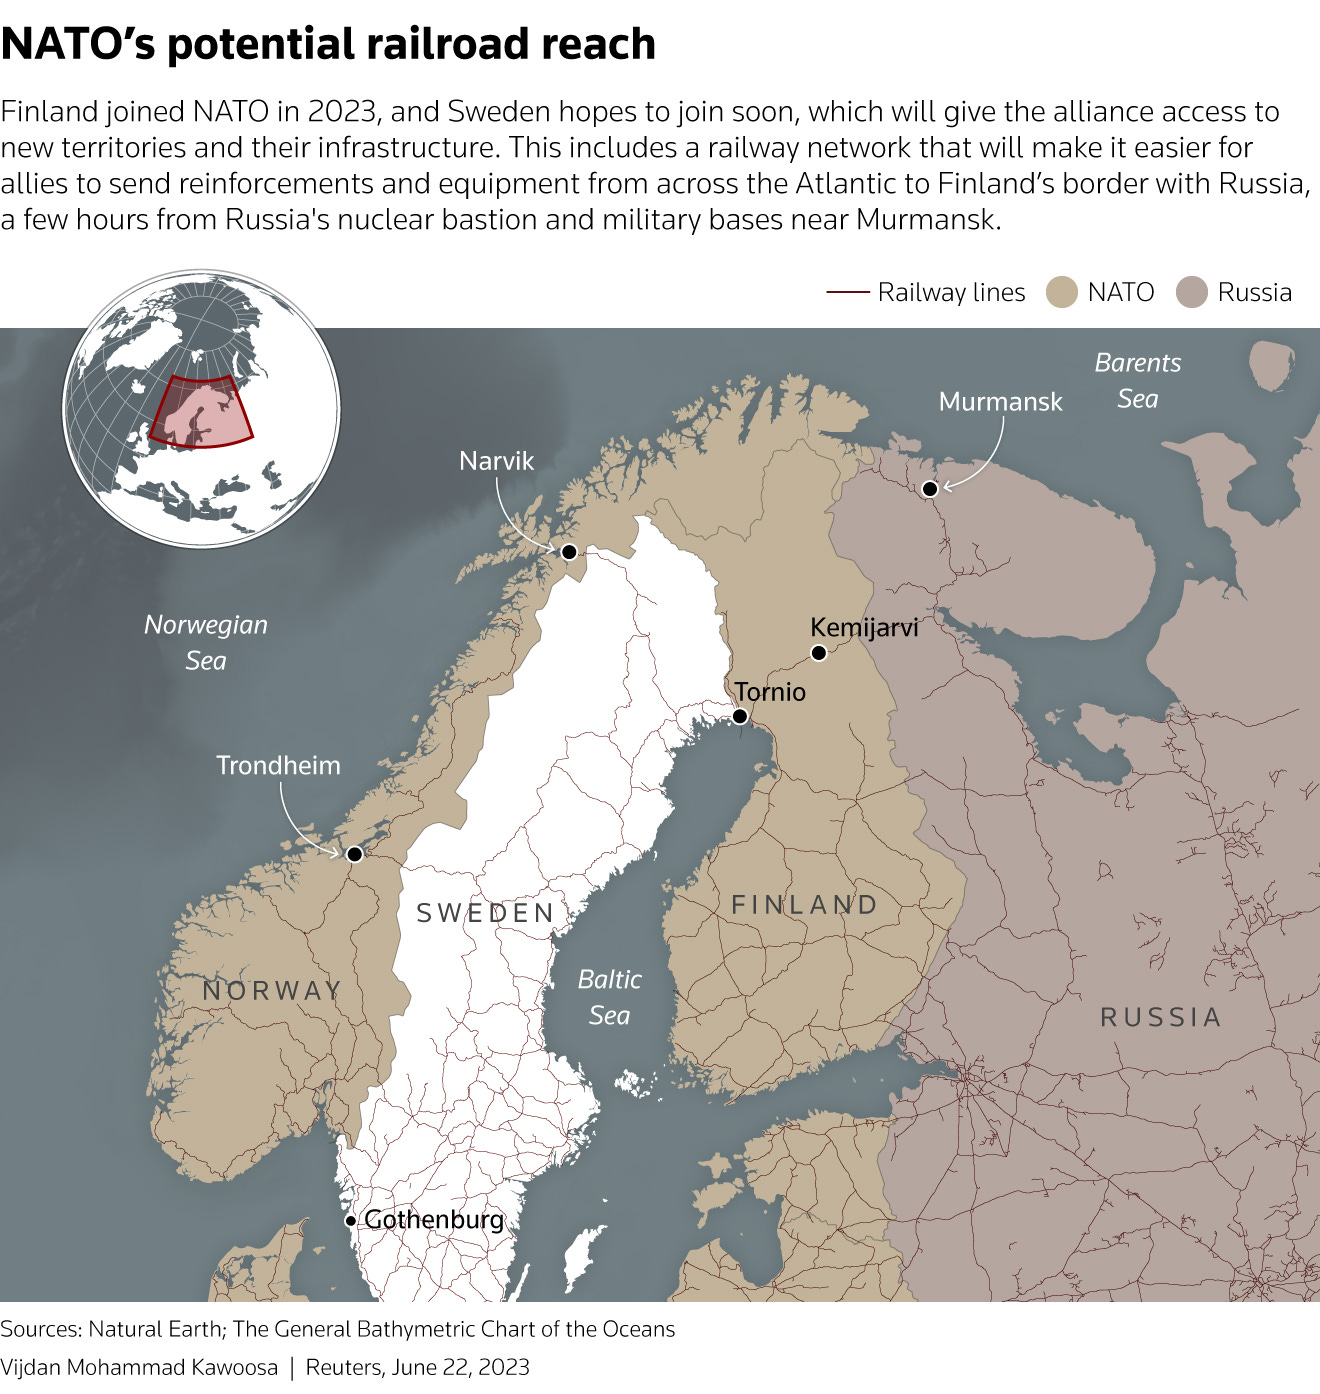 Maps showing marine traffic through the Baltic